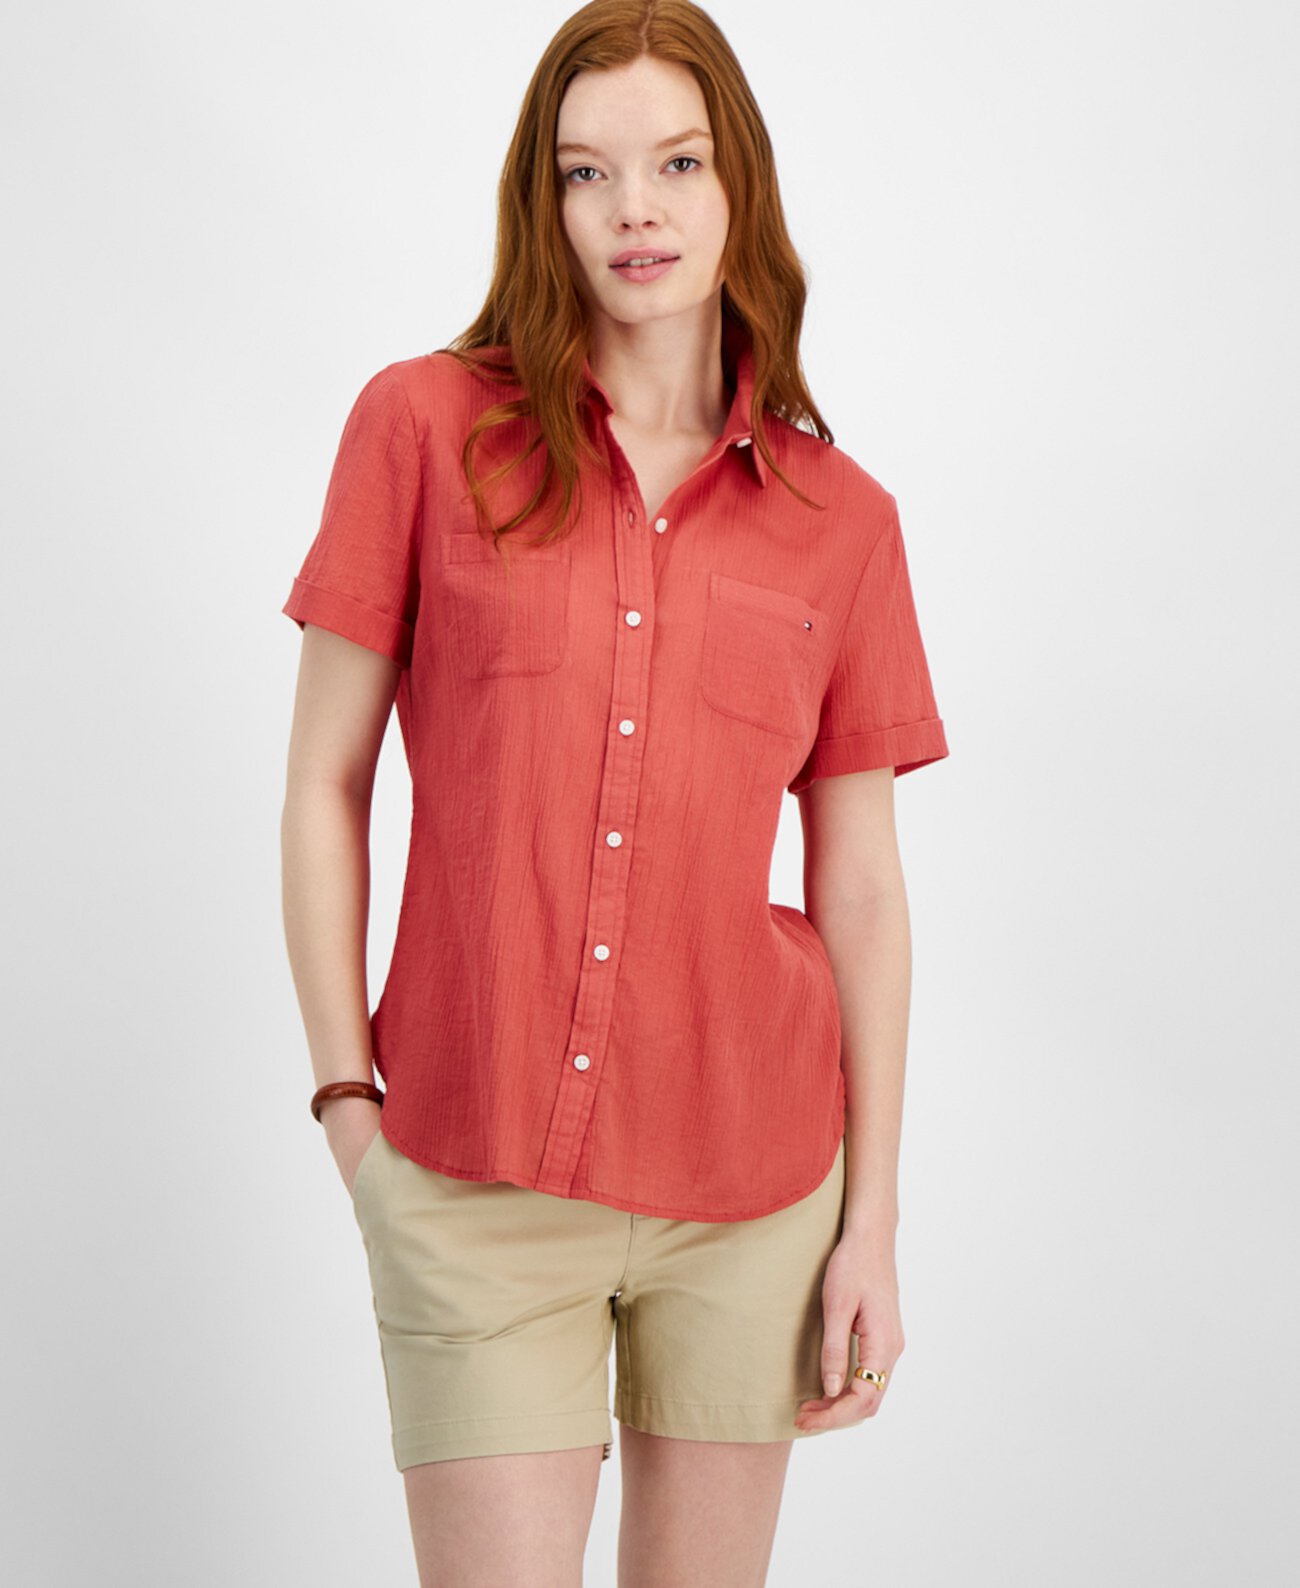 Women's Cotton Solid Short-Sleeve Shirt Tommy Hilfiger